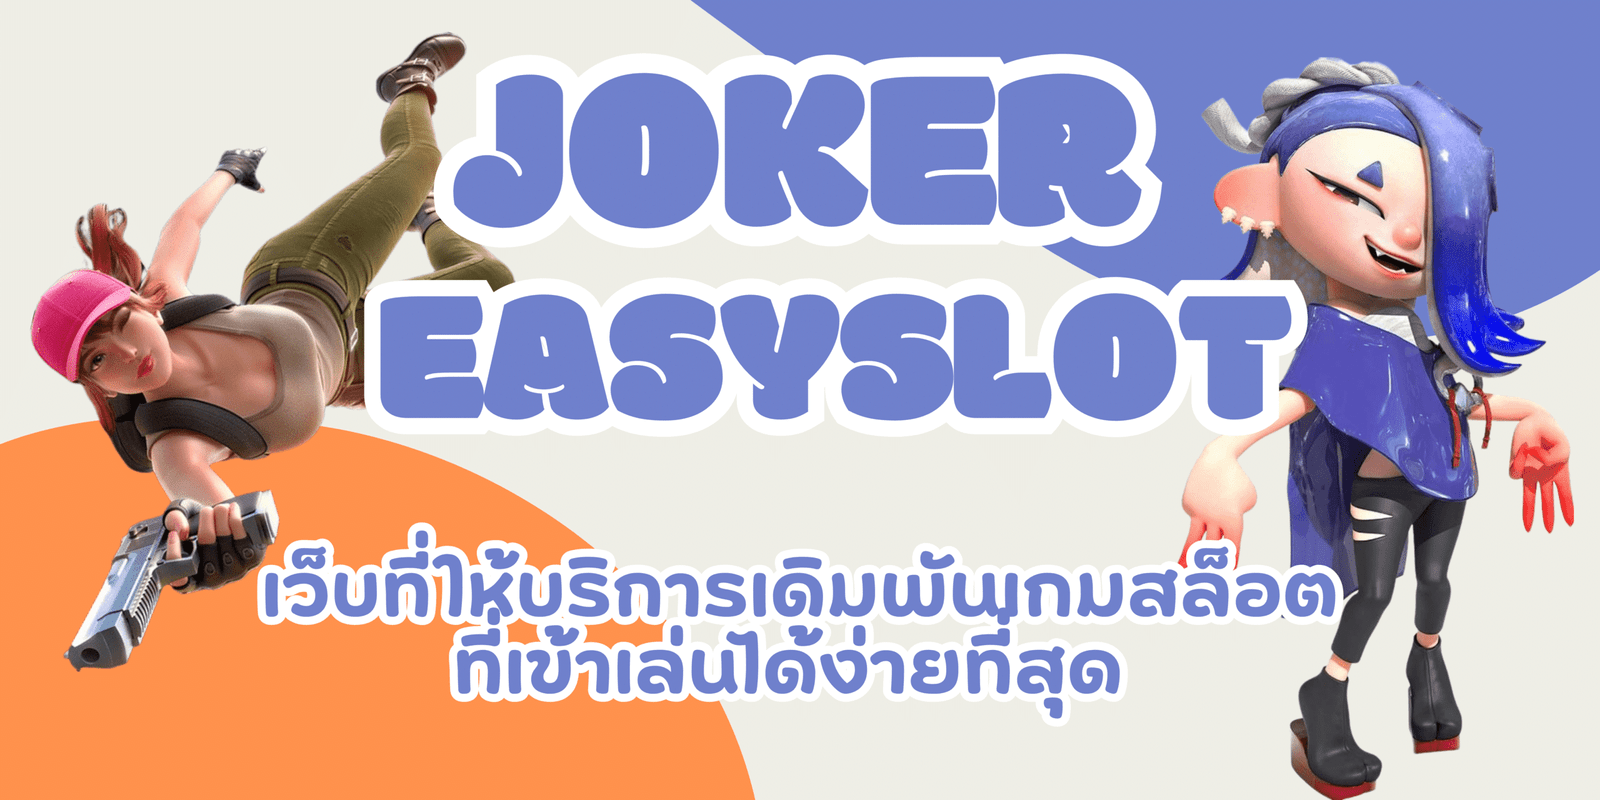 joker-easyslot-สมัครสมาชิก